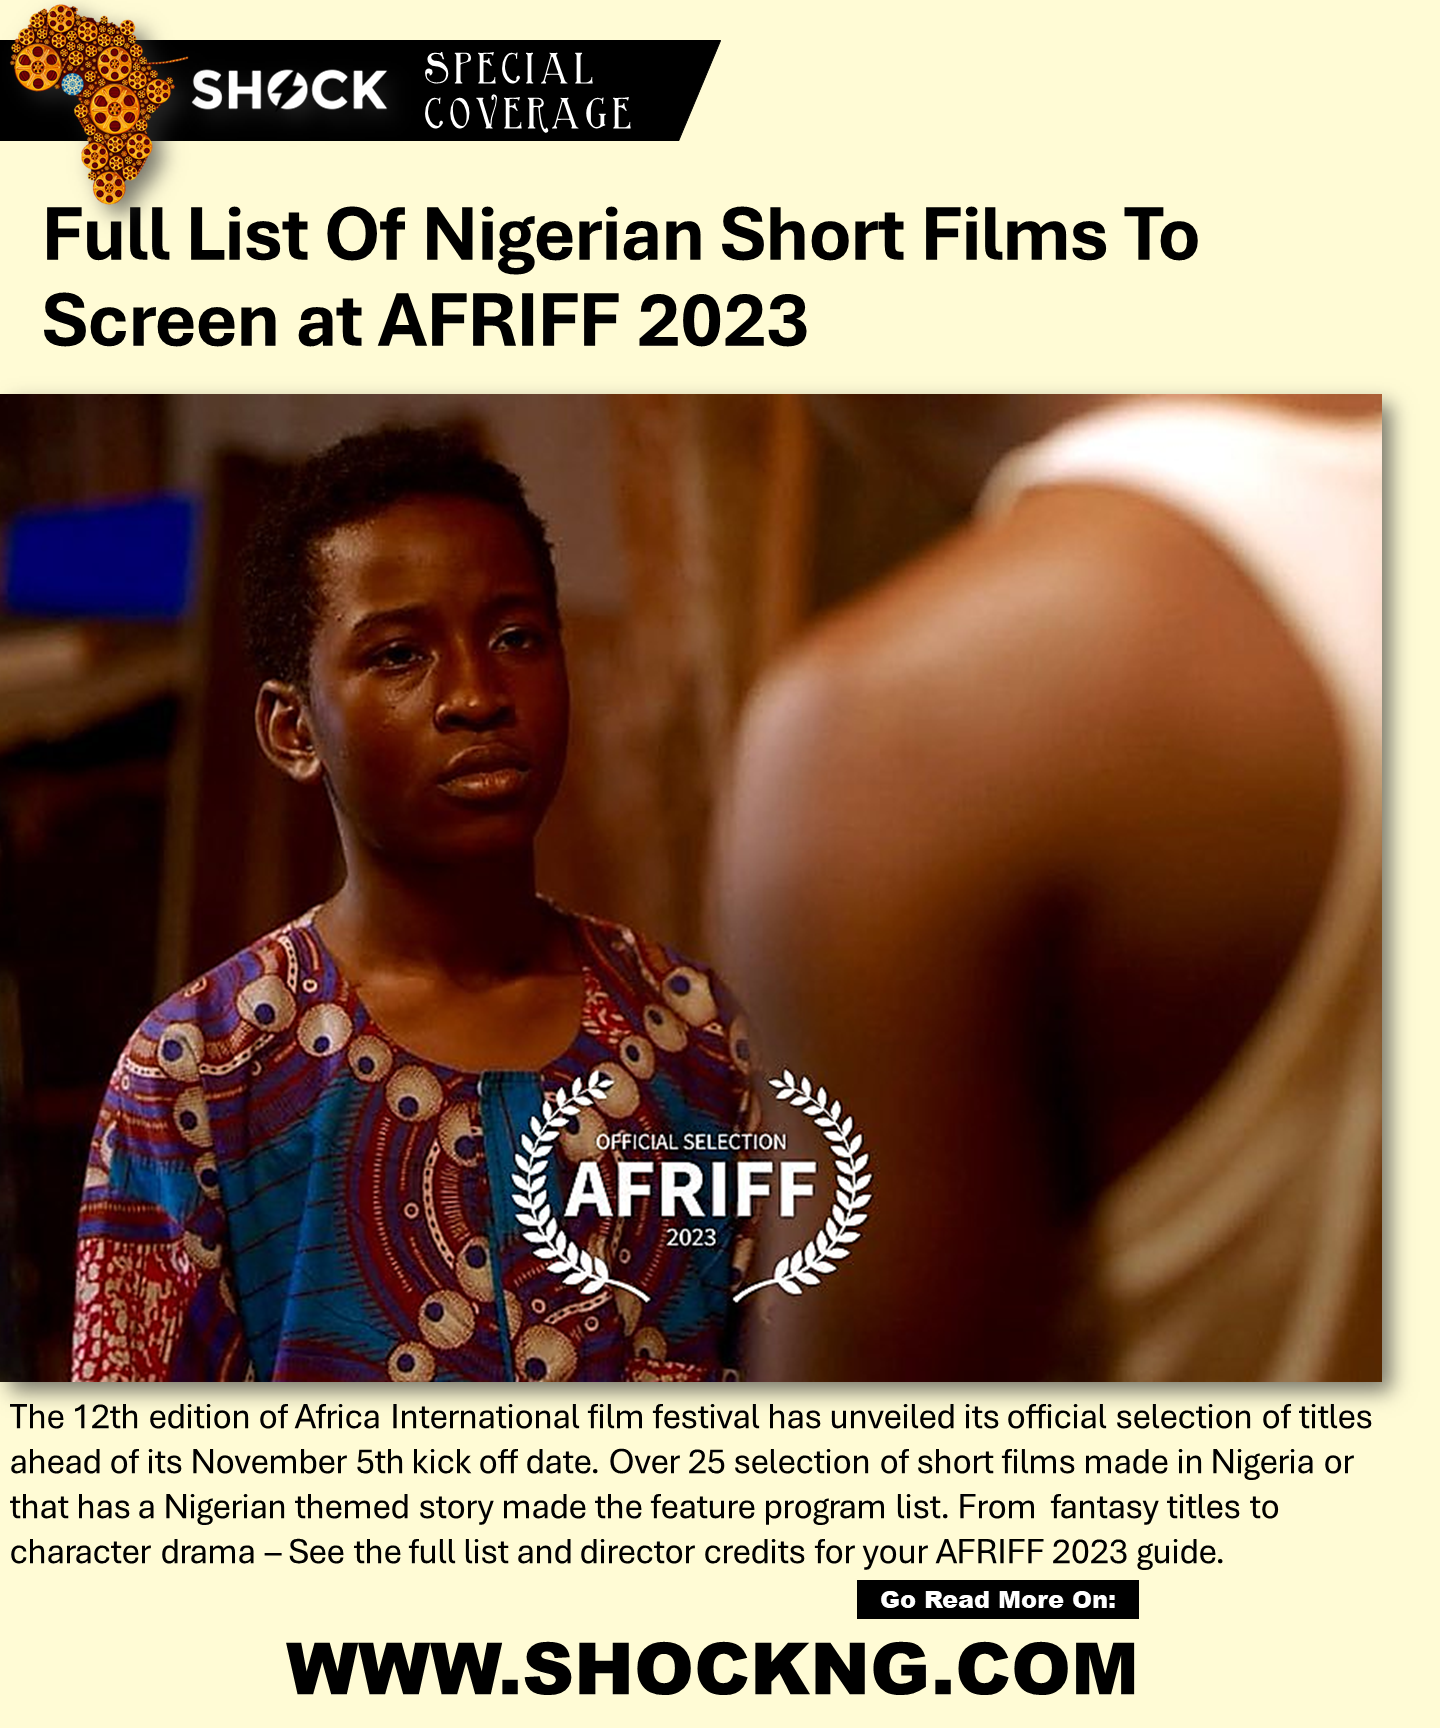 Short films at AFRIFF 2023 - Must See Nigerian Short Films at AFRIFF 2023